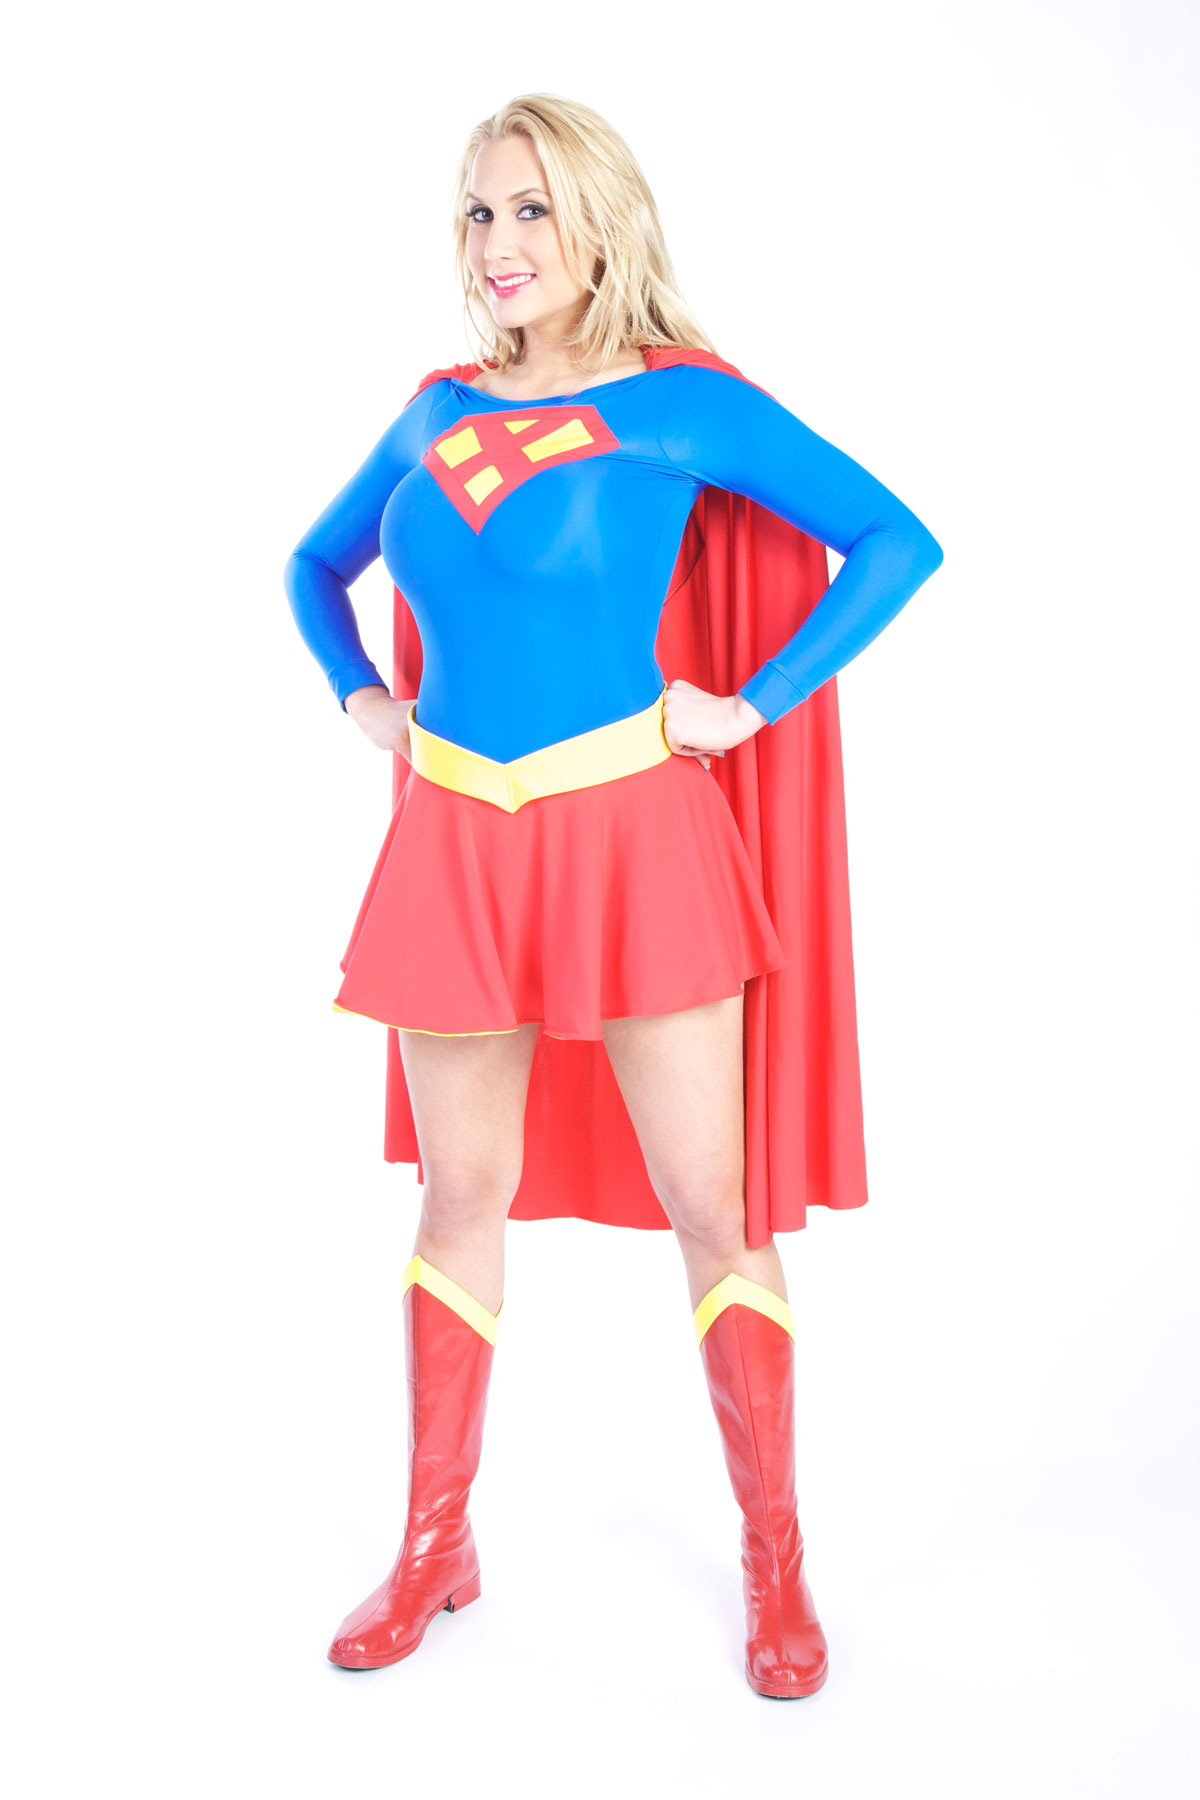 Alanah rae supergirl